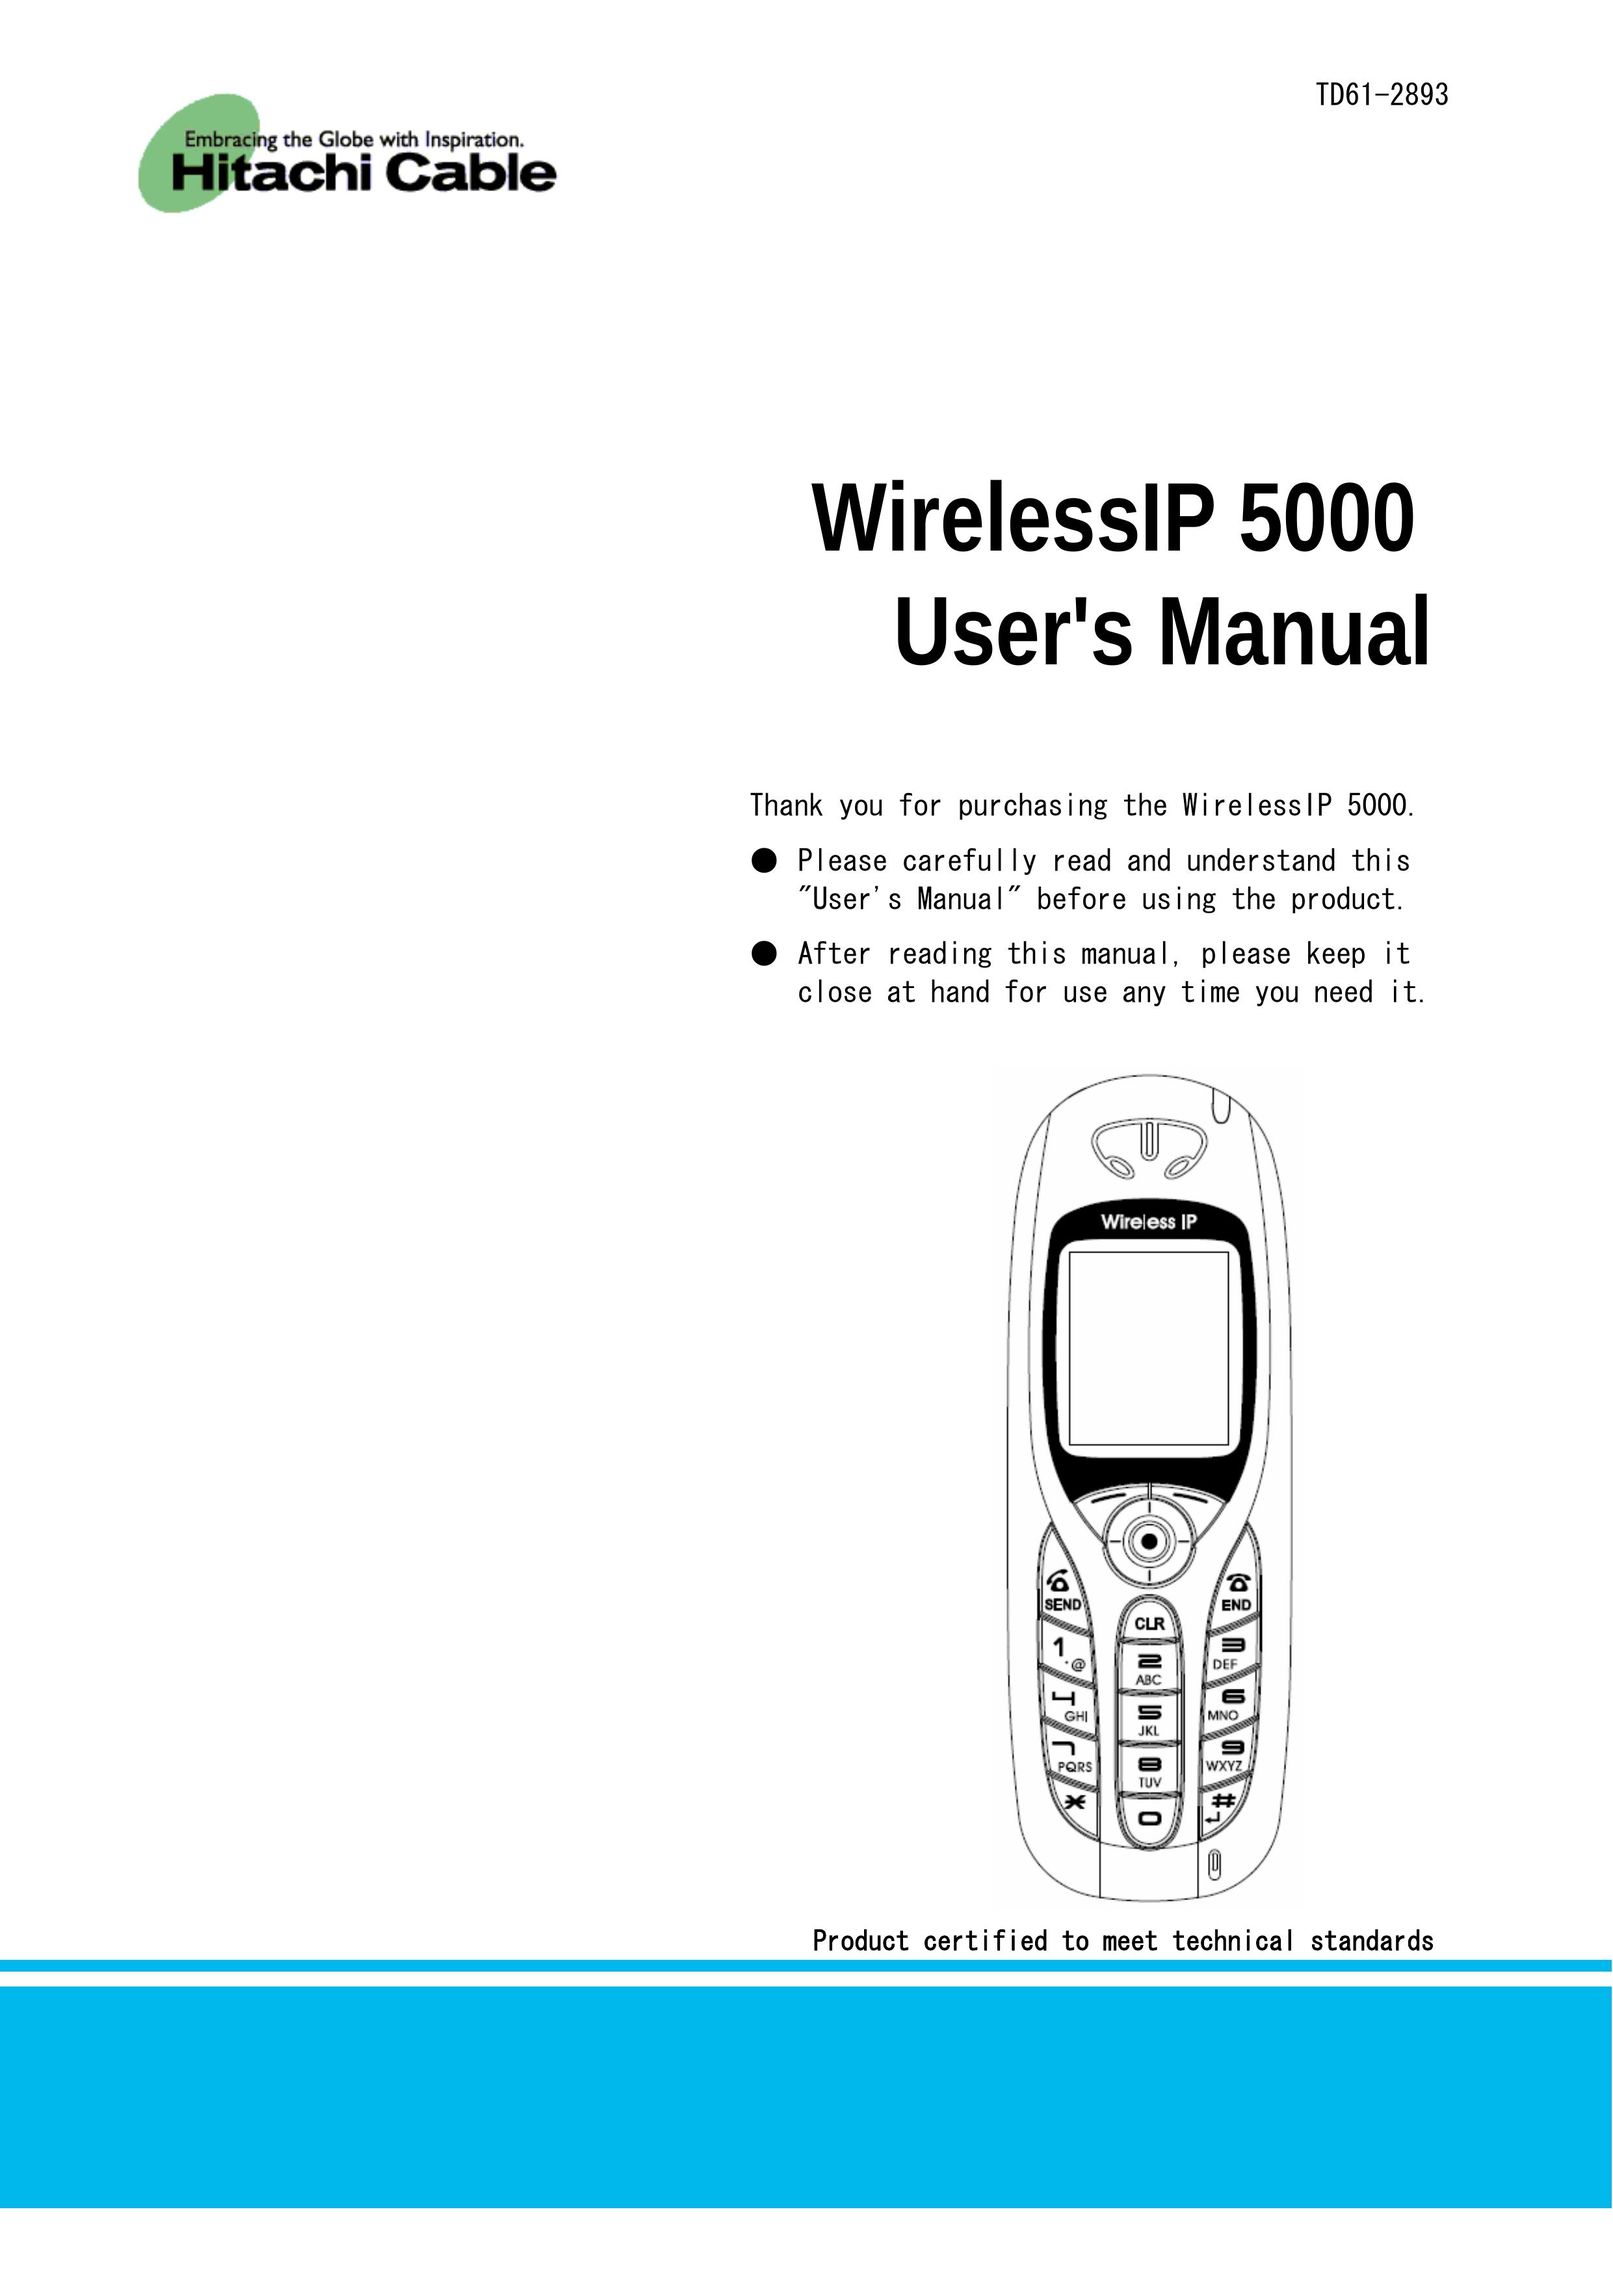 Hitachi WirelessIP 5000 Telephone User Manual